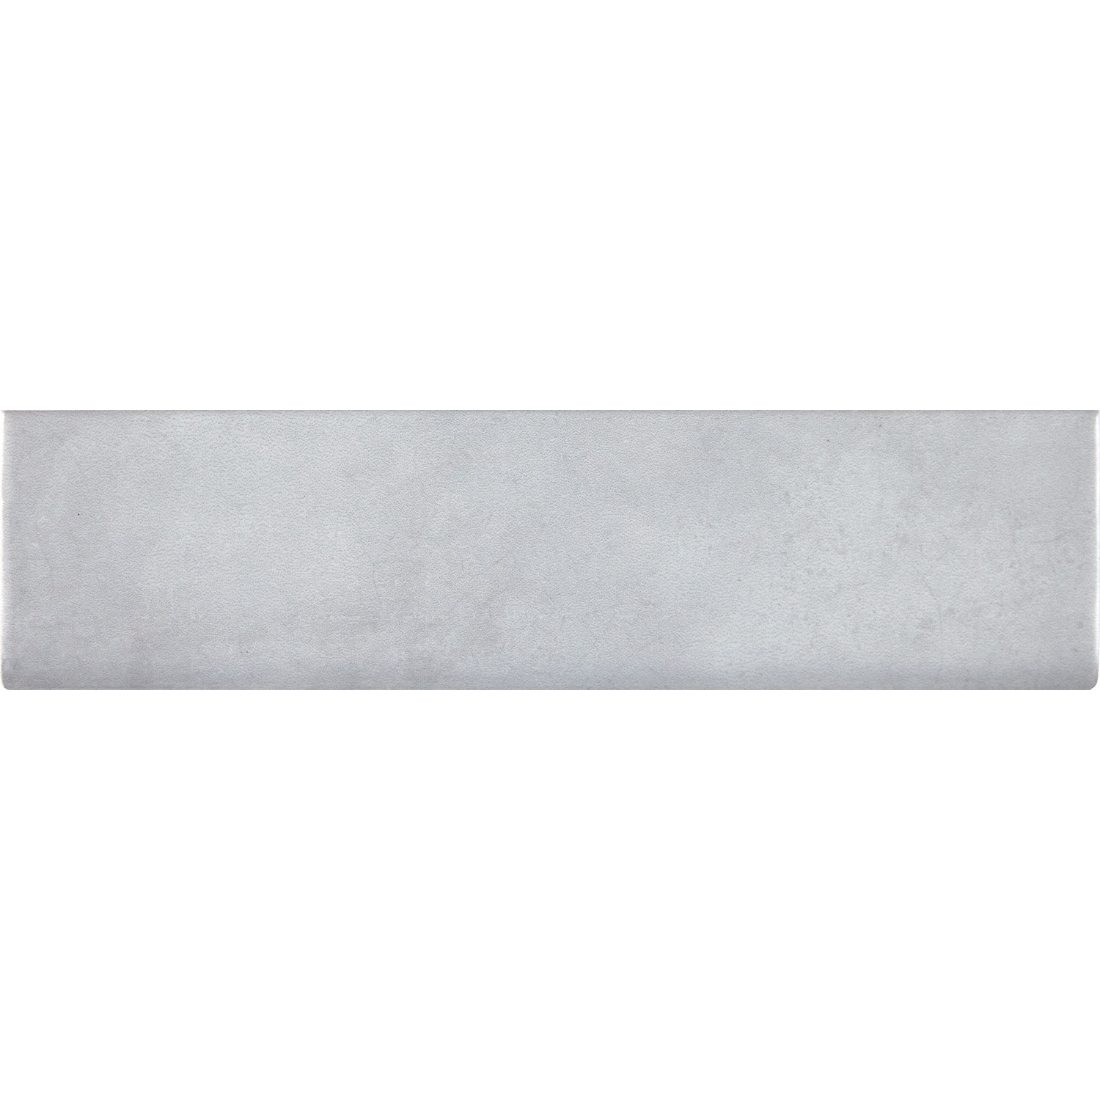 Splendours White Trim 7.5x30cm (23995)